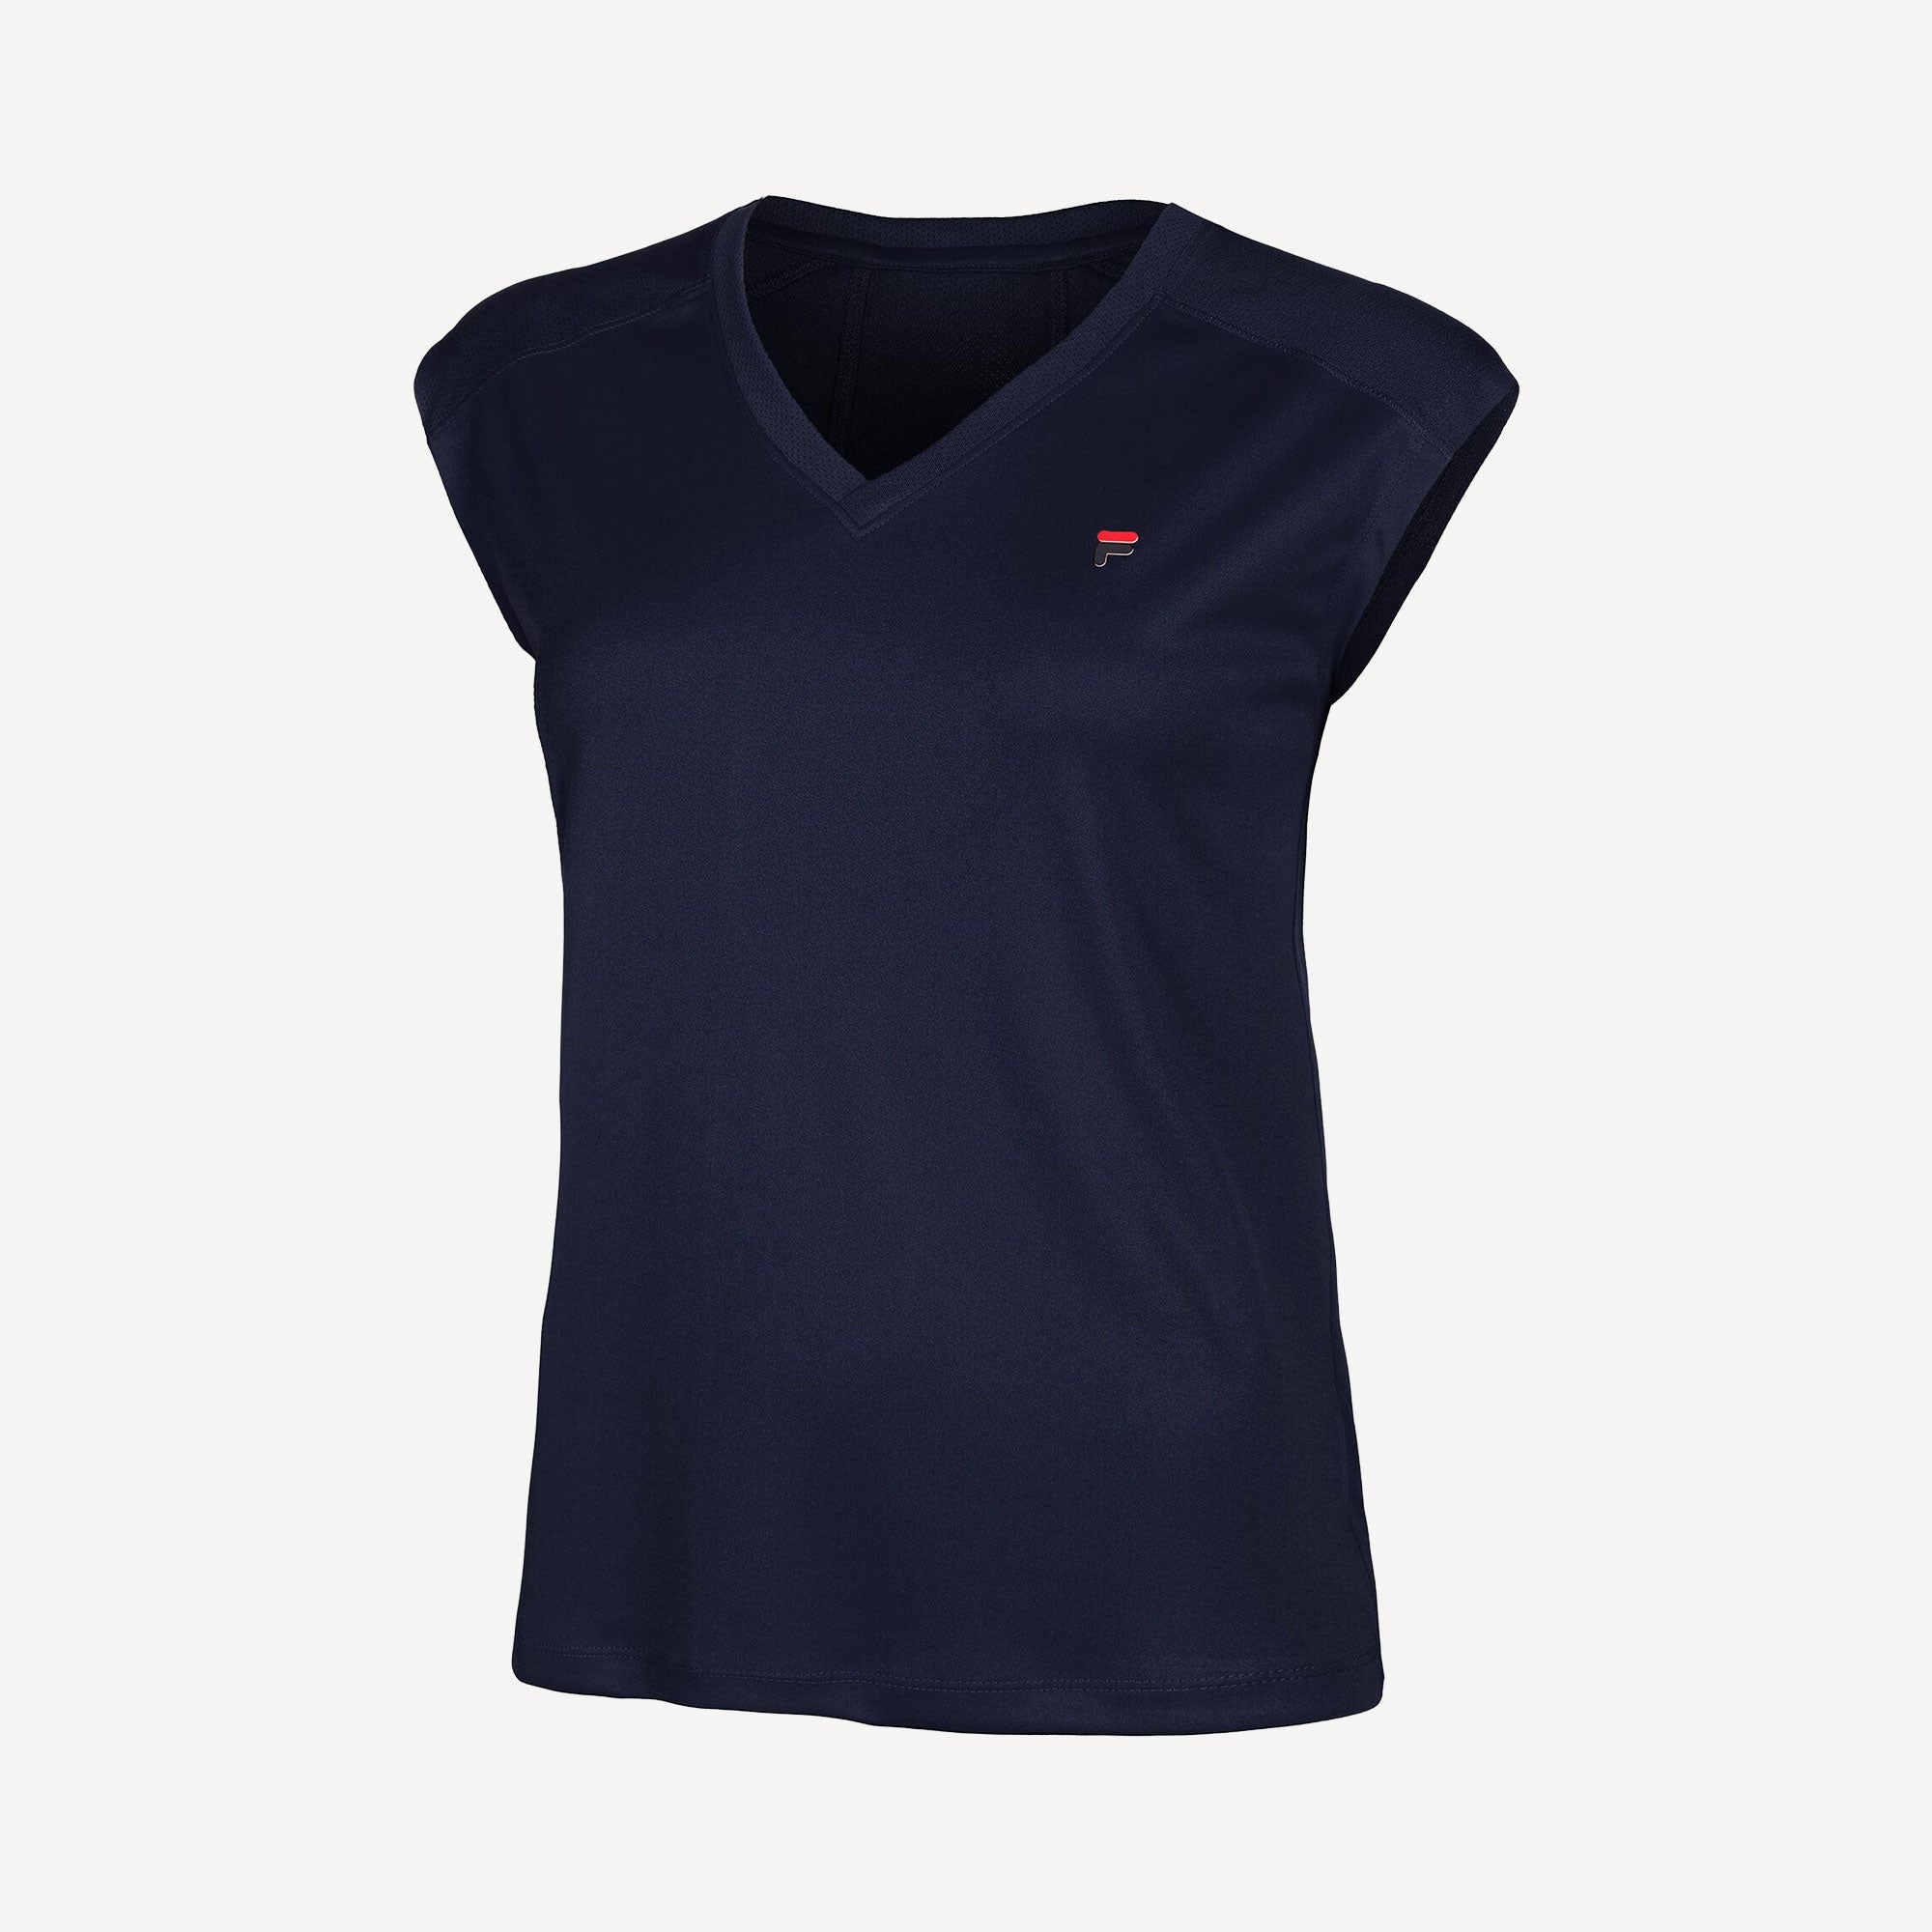 Fila Maia Women's Tennis Shirt - Dark Blue (1)